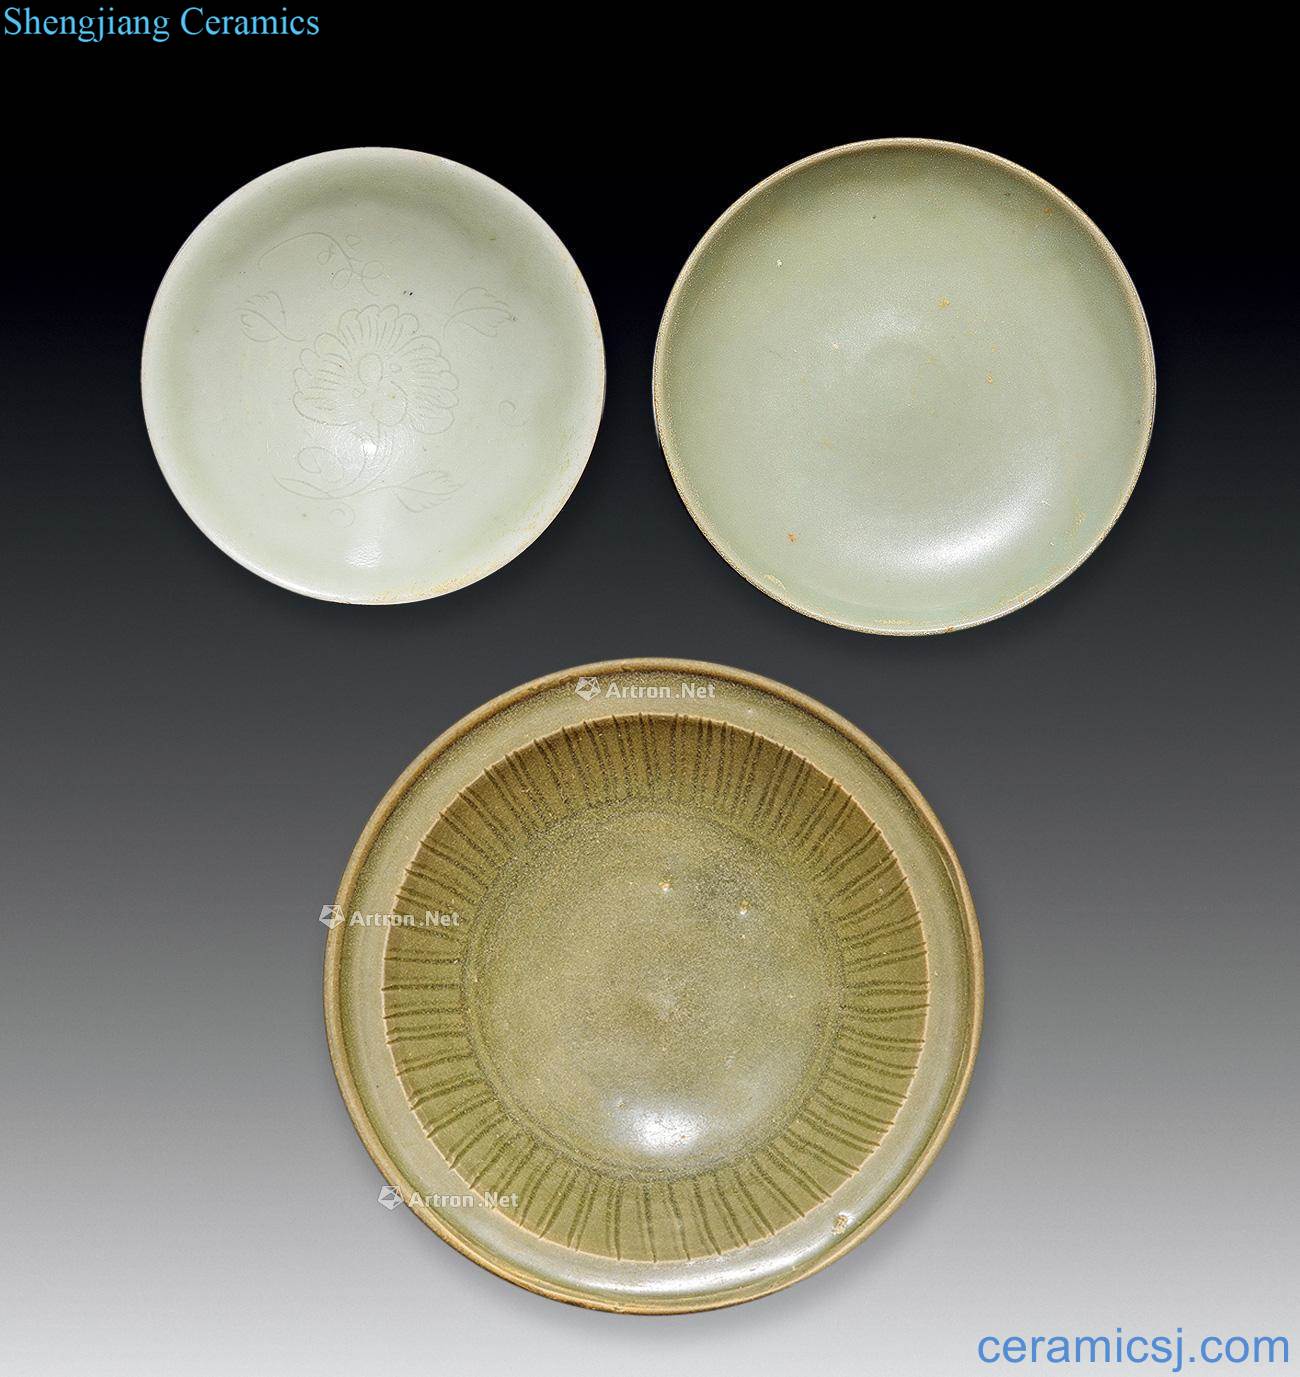 Yuan/Ming celadon plate (3) only